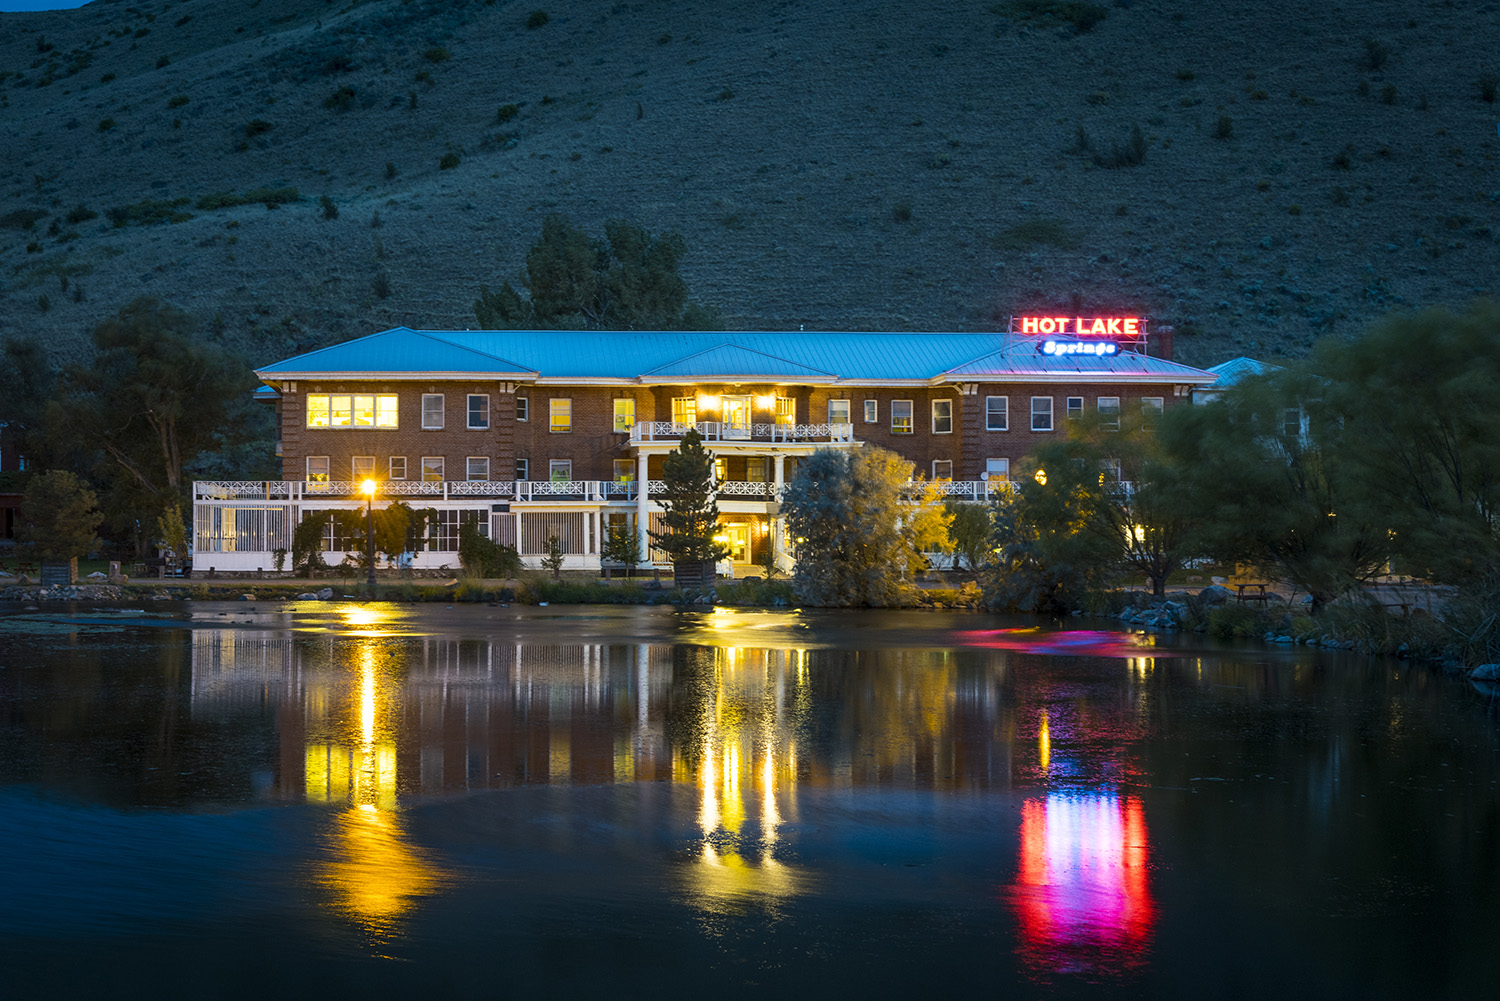 Hot Lake Springs Hotel